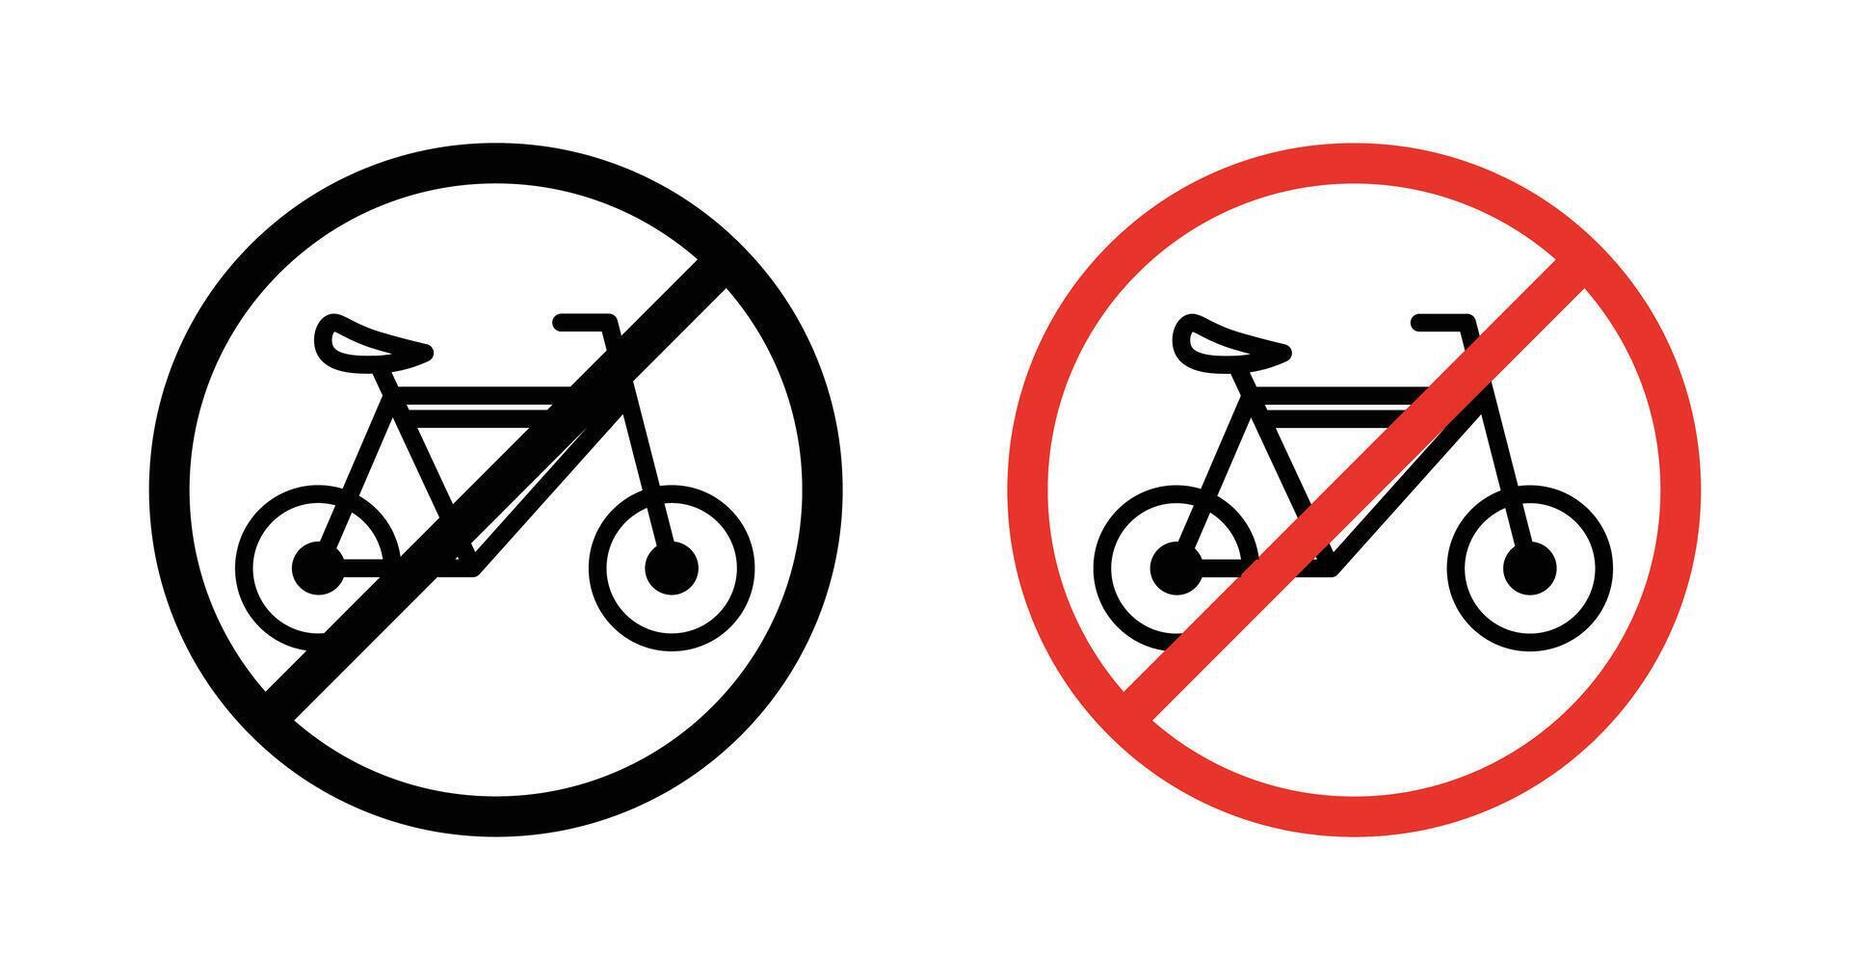 No bicycle sign vector